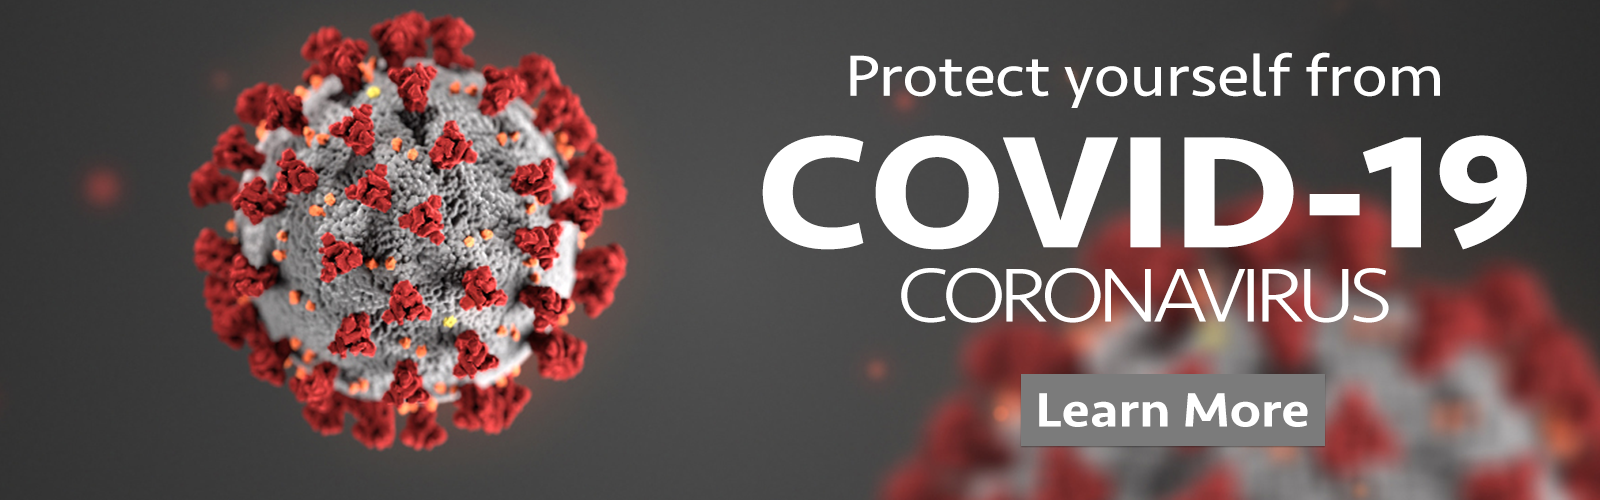 Coronavirus Website Banner1_1600x500.png